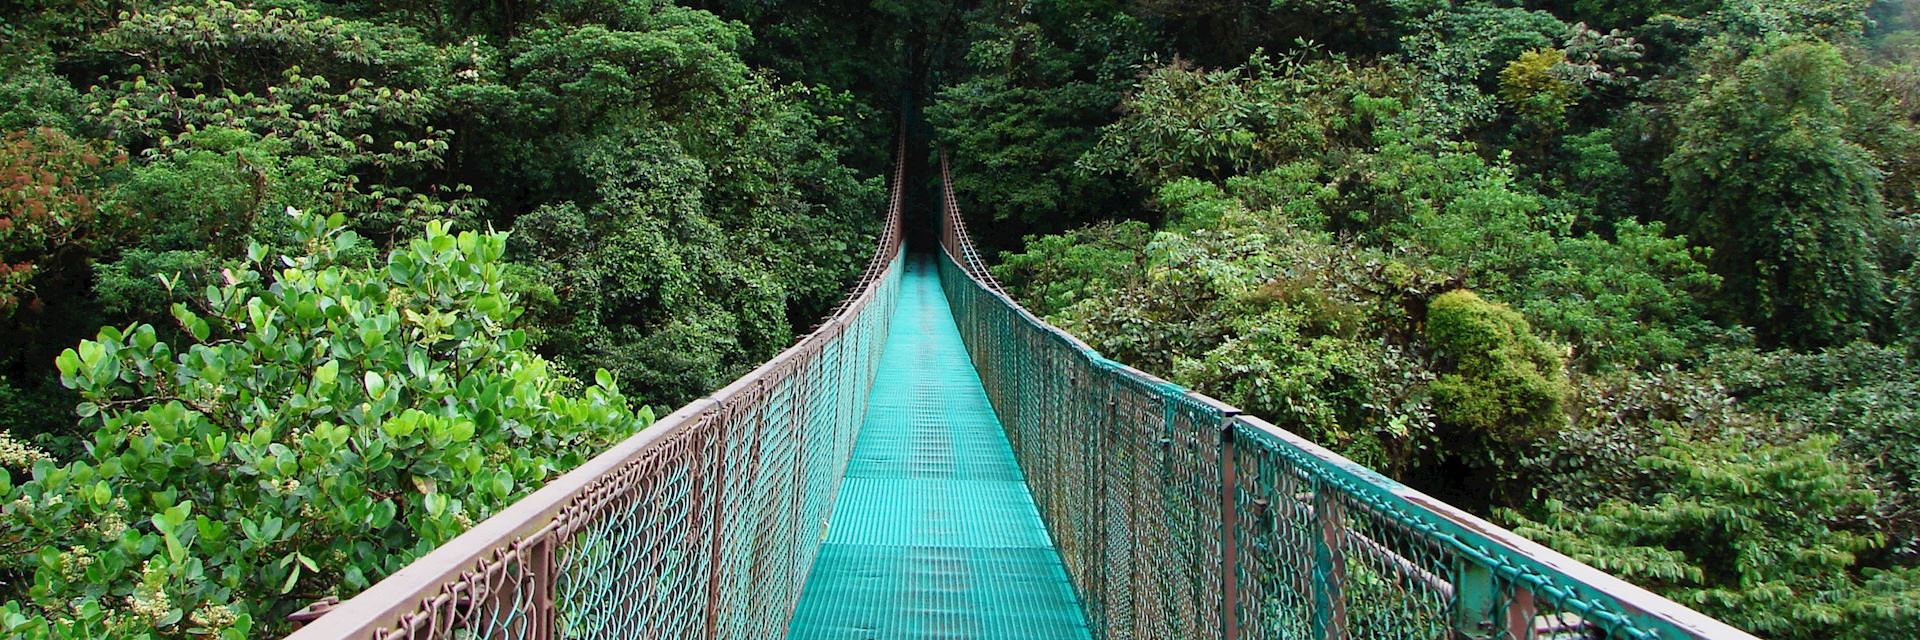 Selvatura Walkways & Zip-lining, Costa Rica | Audley Travel UK